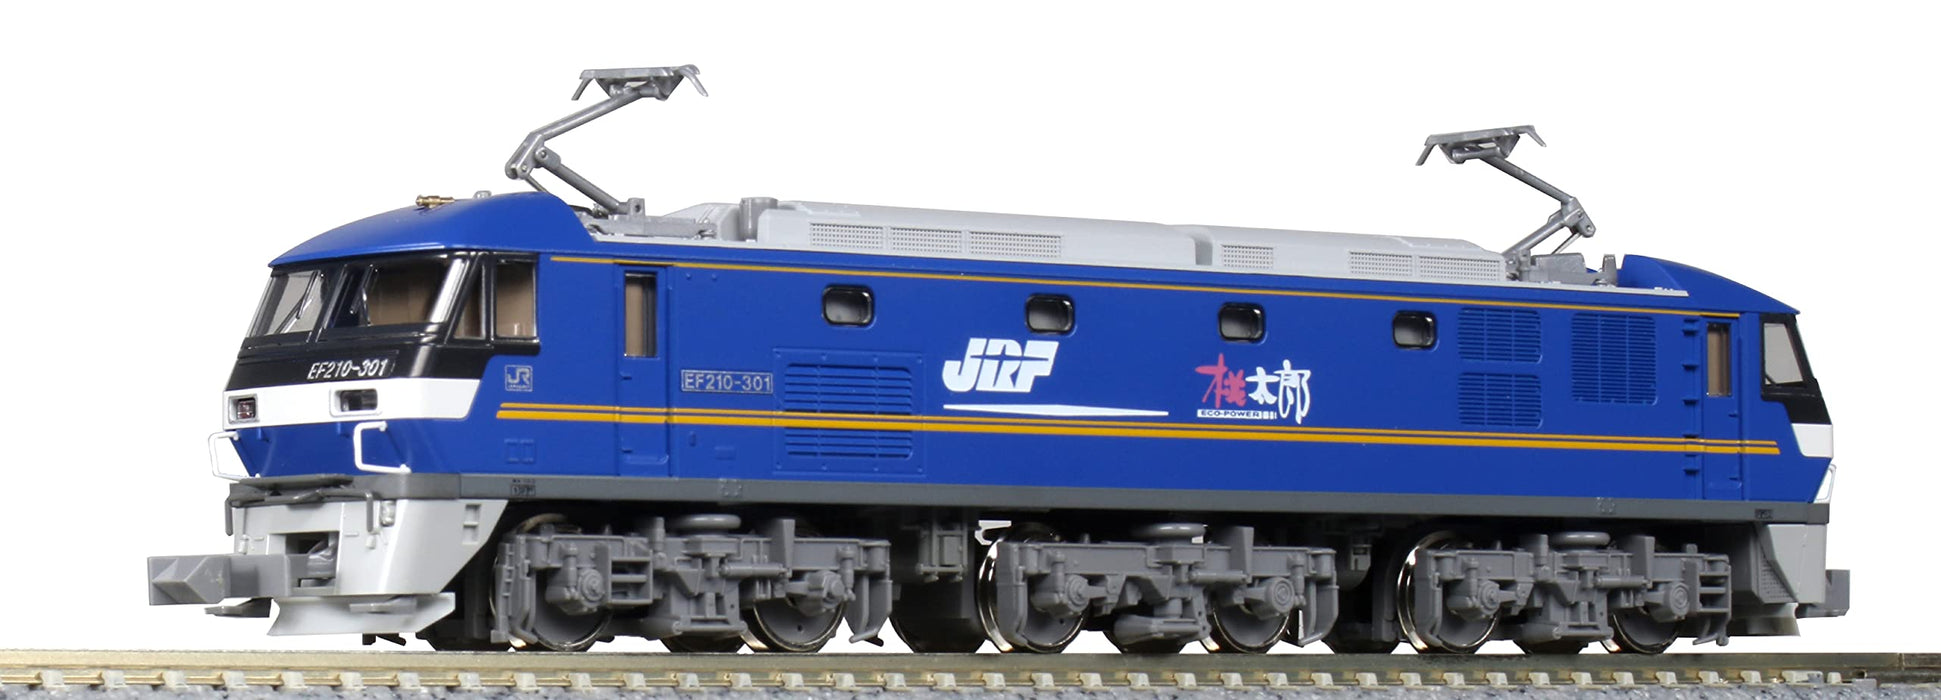 Kato Electric Locomotive Model N Gauge EF210 300 JRF Mark Special Project 3092-2